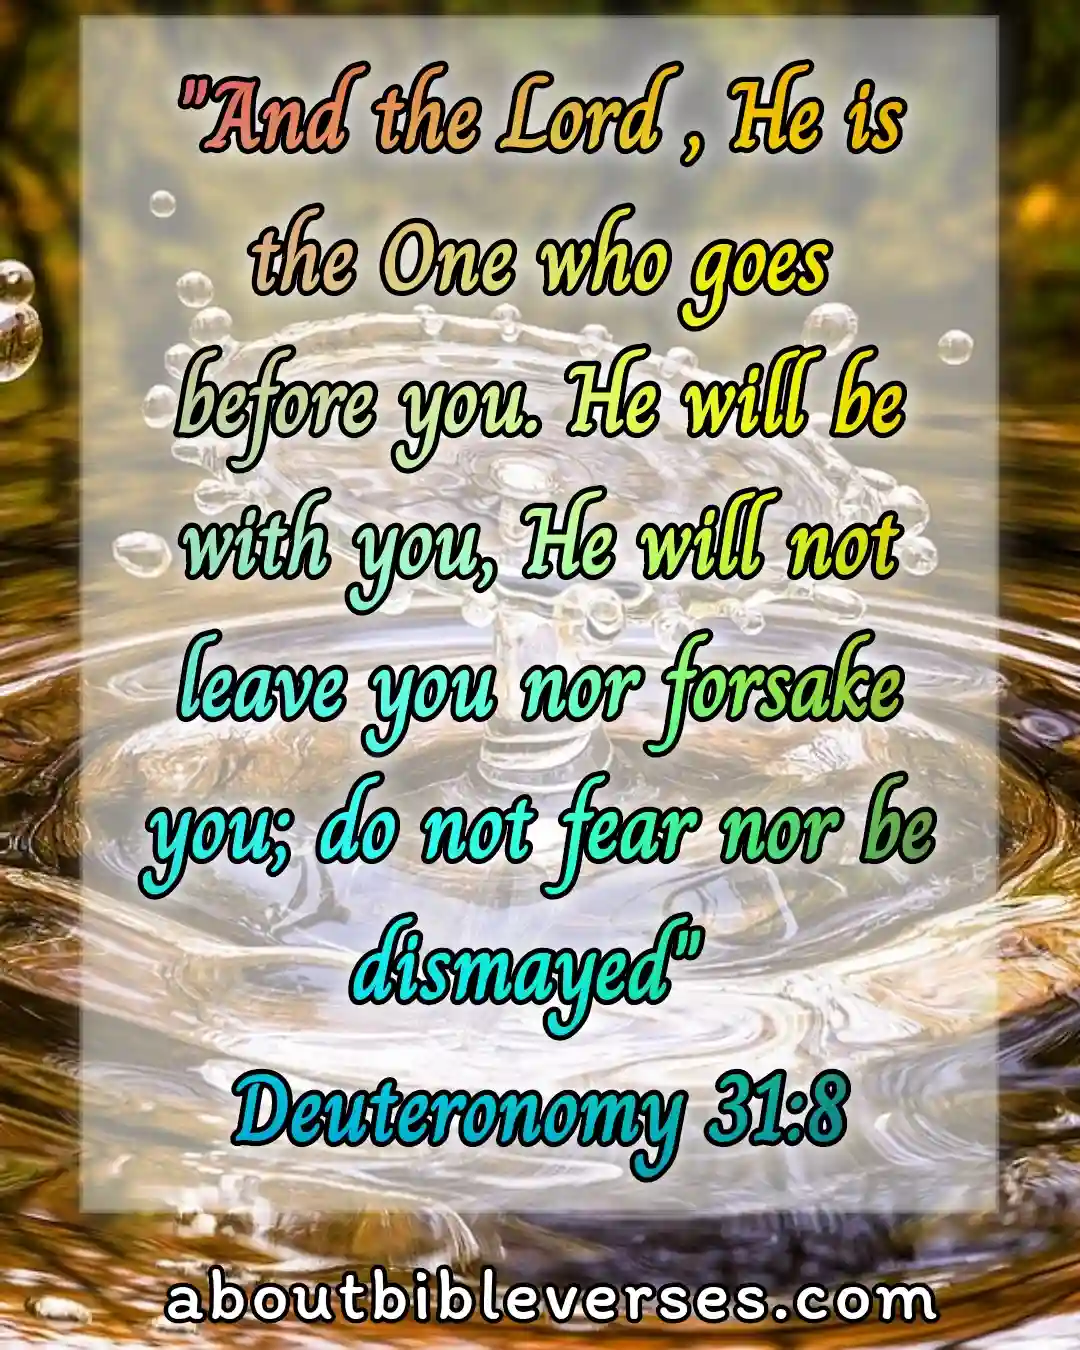 Bible Verses About Adapting To Change (Deuteronomy 31:8)